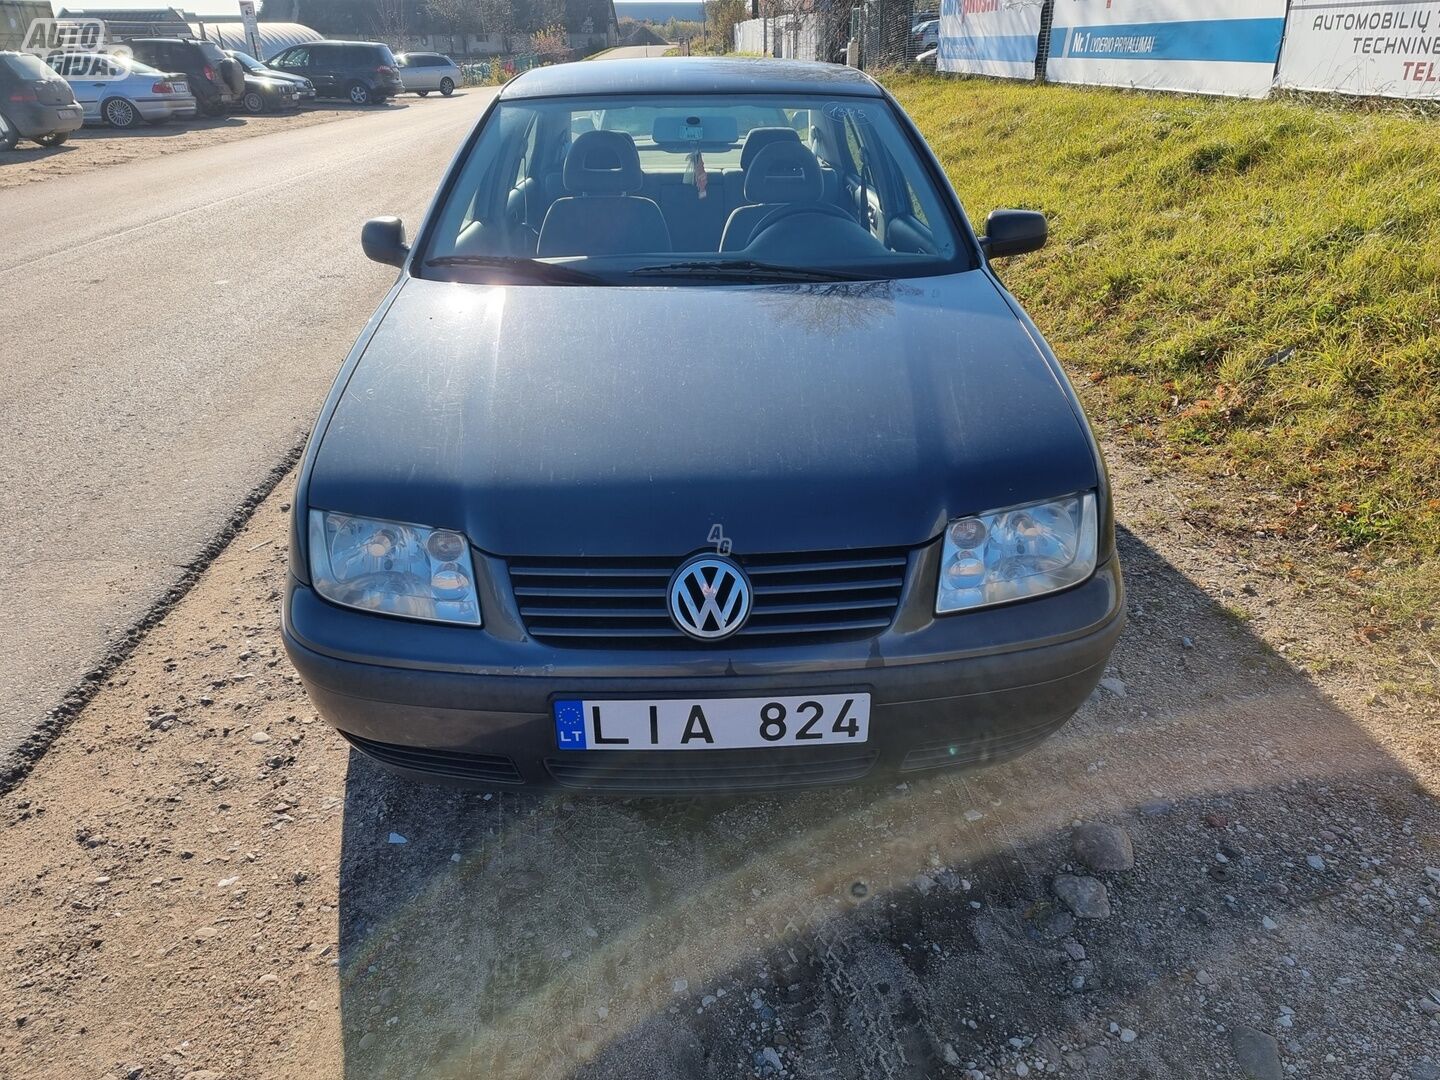 Volkswagen Bora 2001 г запчясти